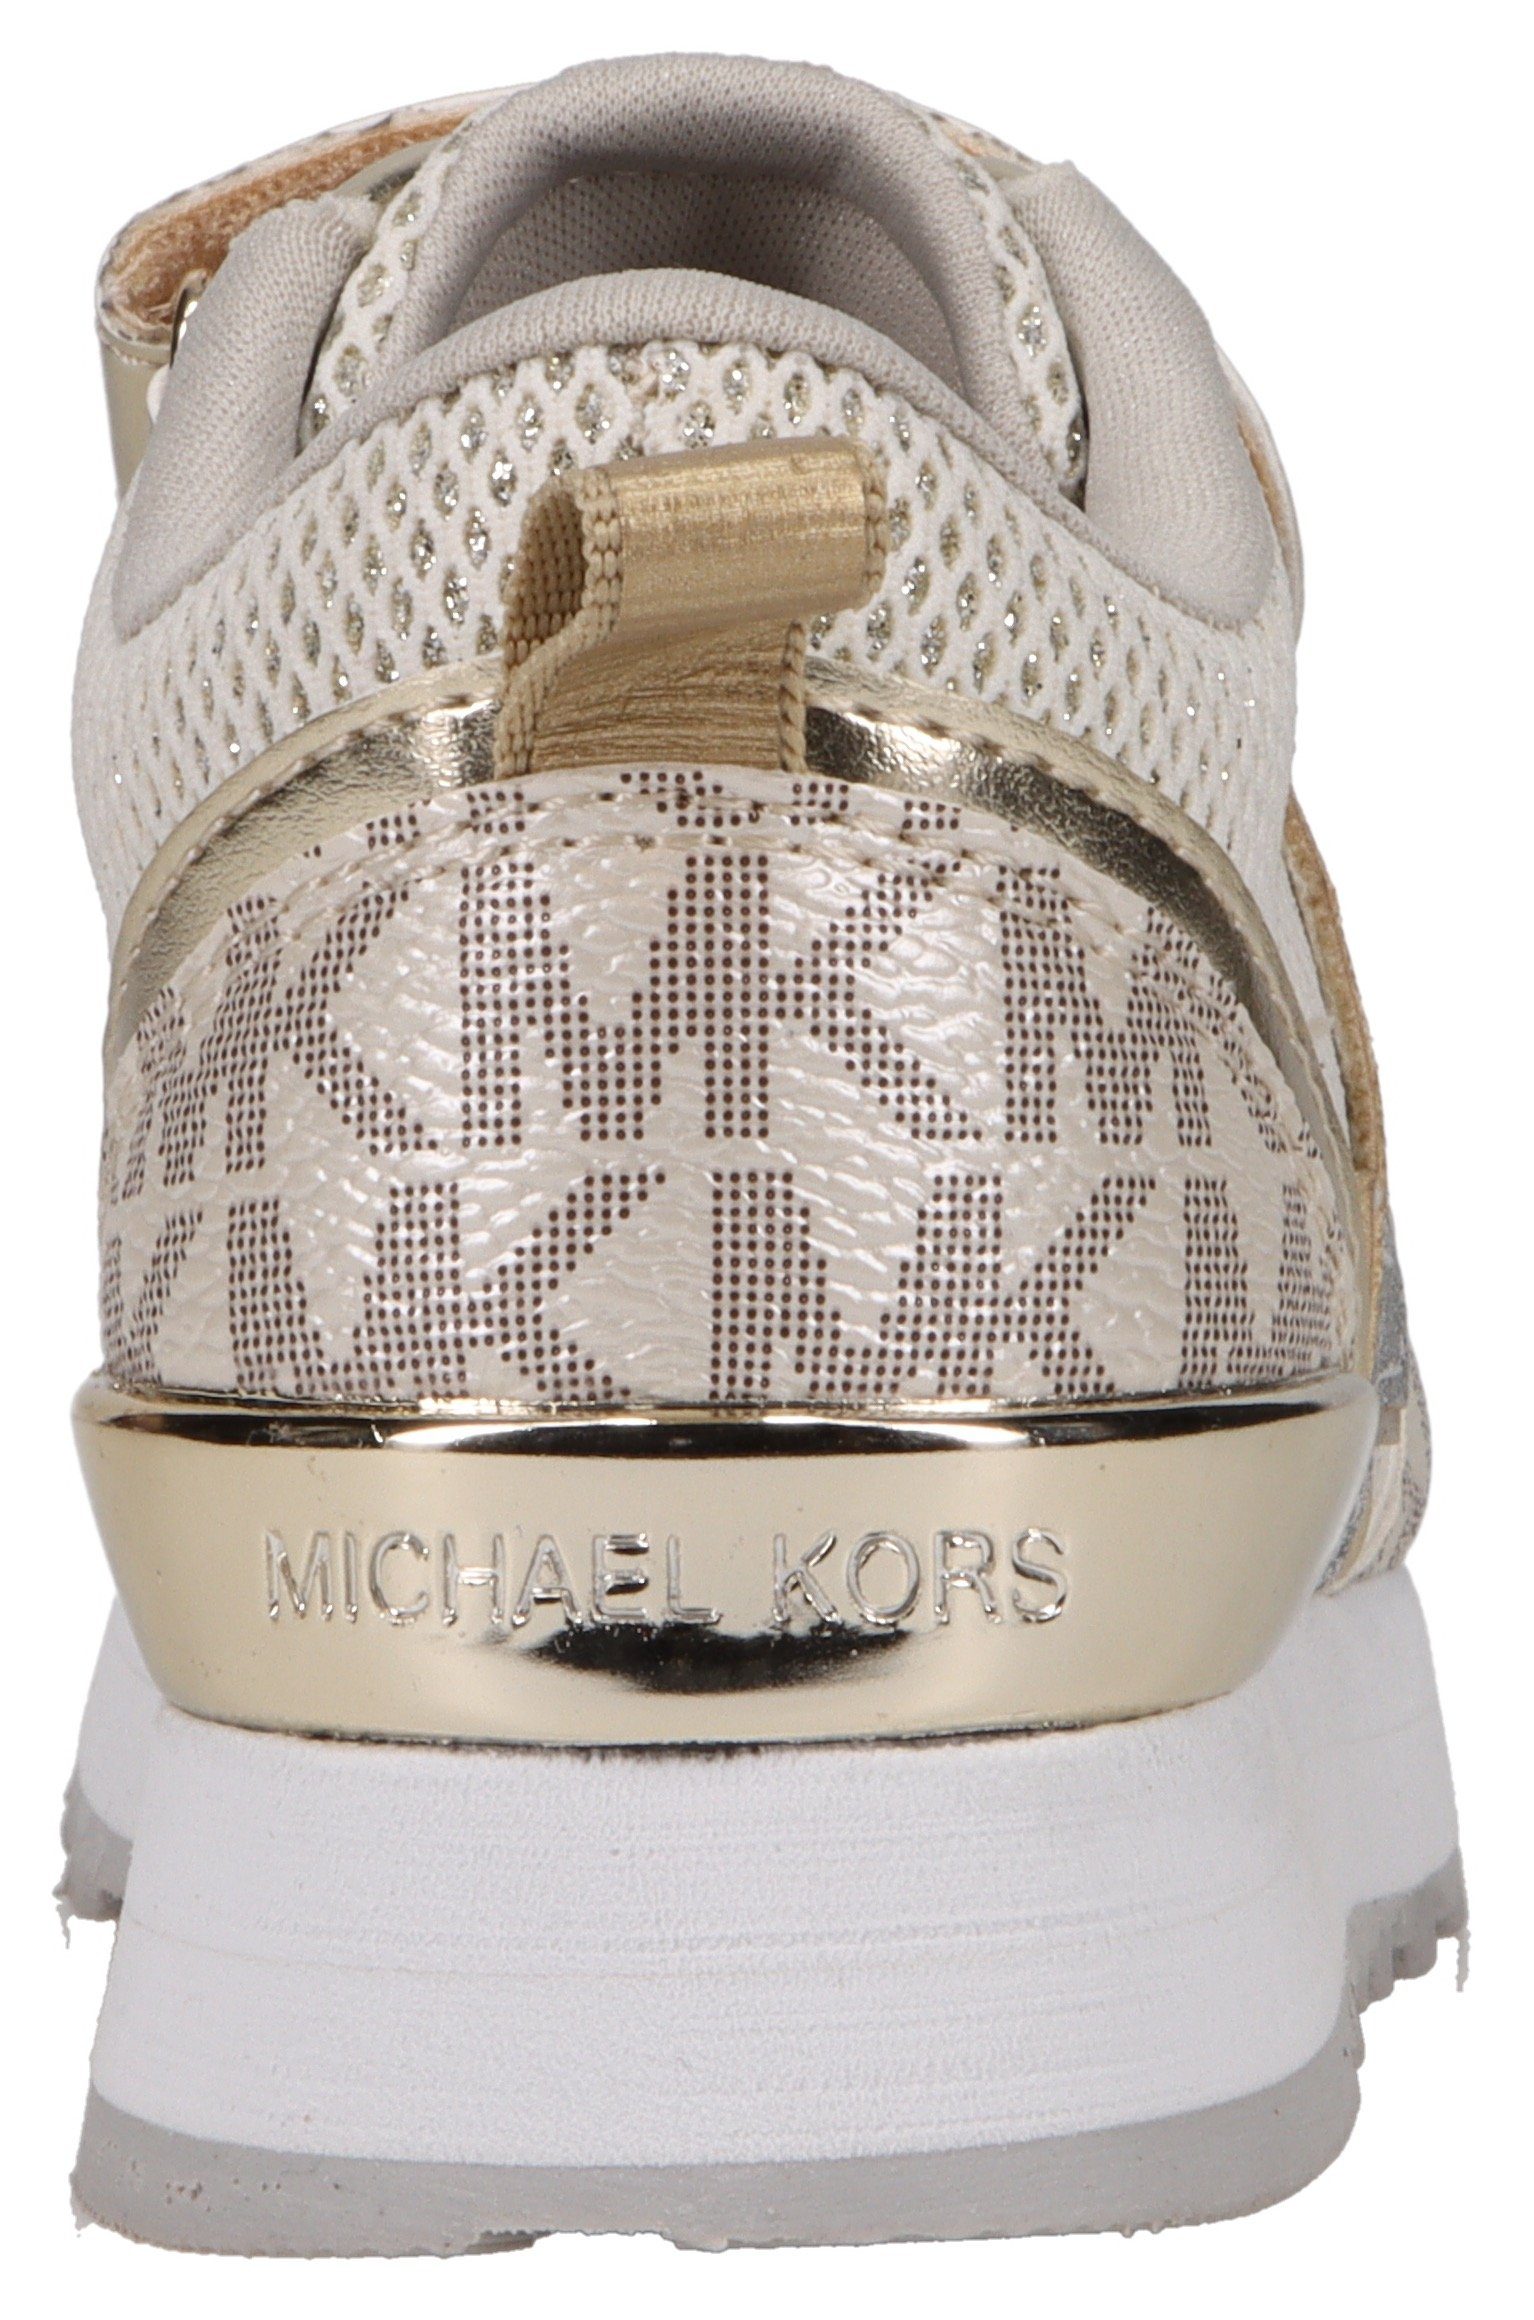 KIDS Logoverzierungen mit BILLIE MIXED DASH MICHAEL vanilla-goldfarben Sneaker KORS METALLIC MK